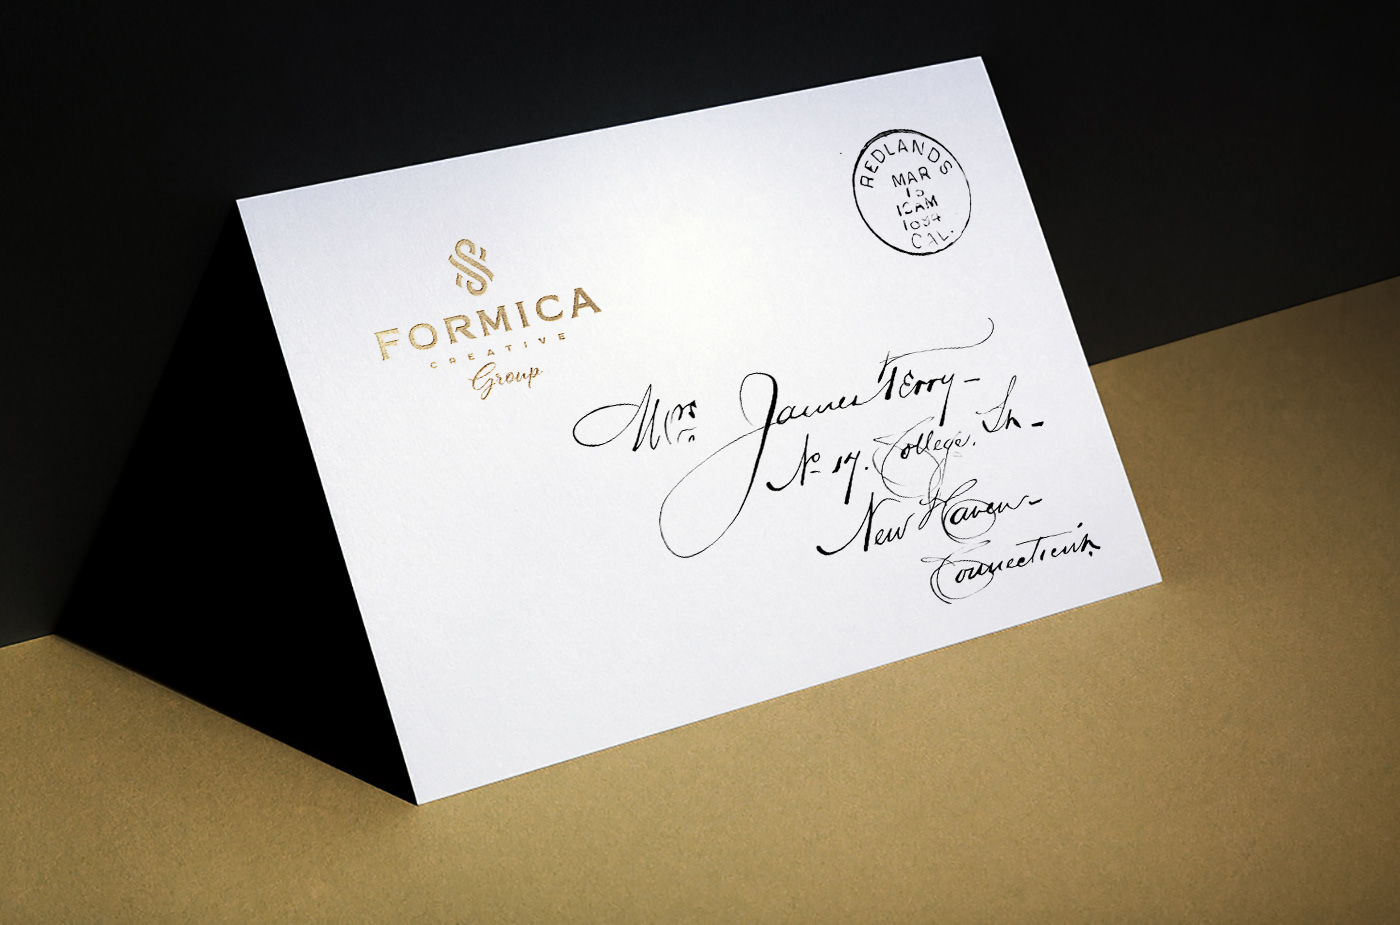 corporate identity Event agency formica monogram logo